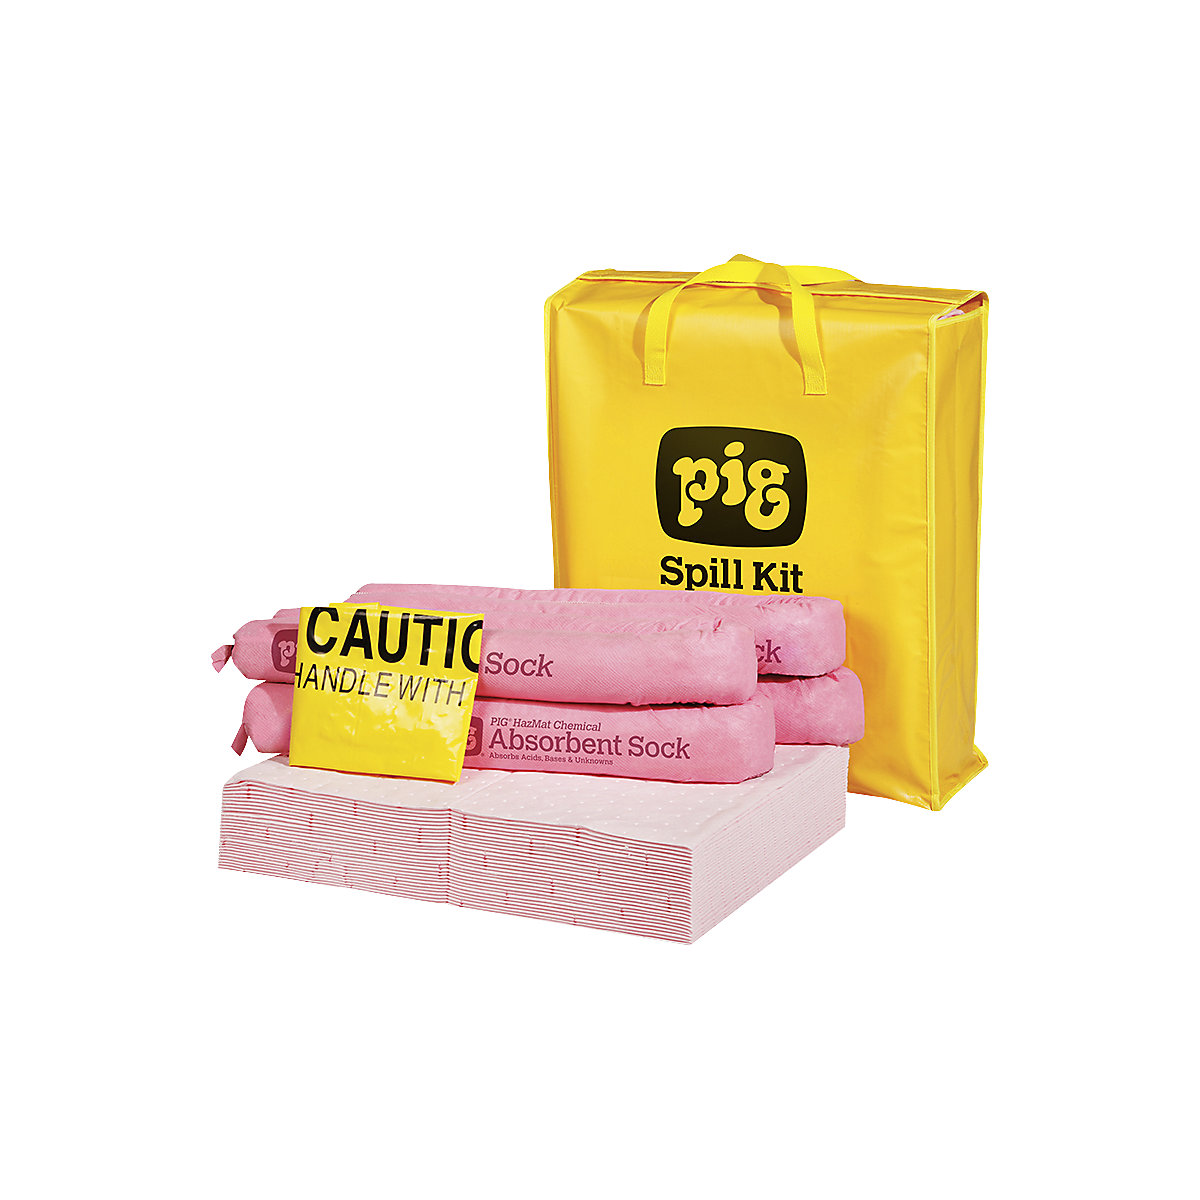 Kit de emergencia en bolsa - PIG